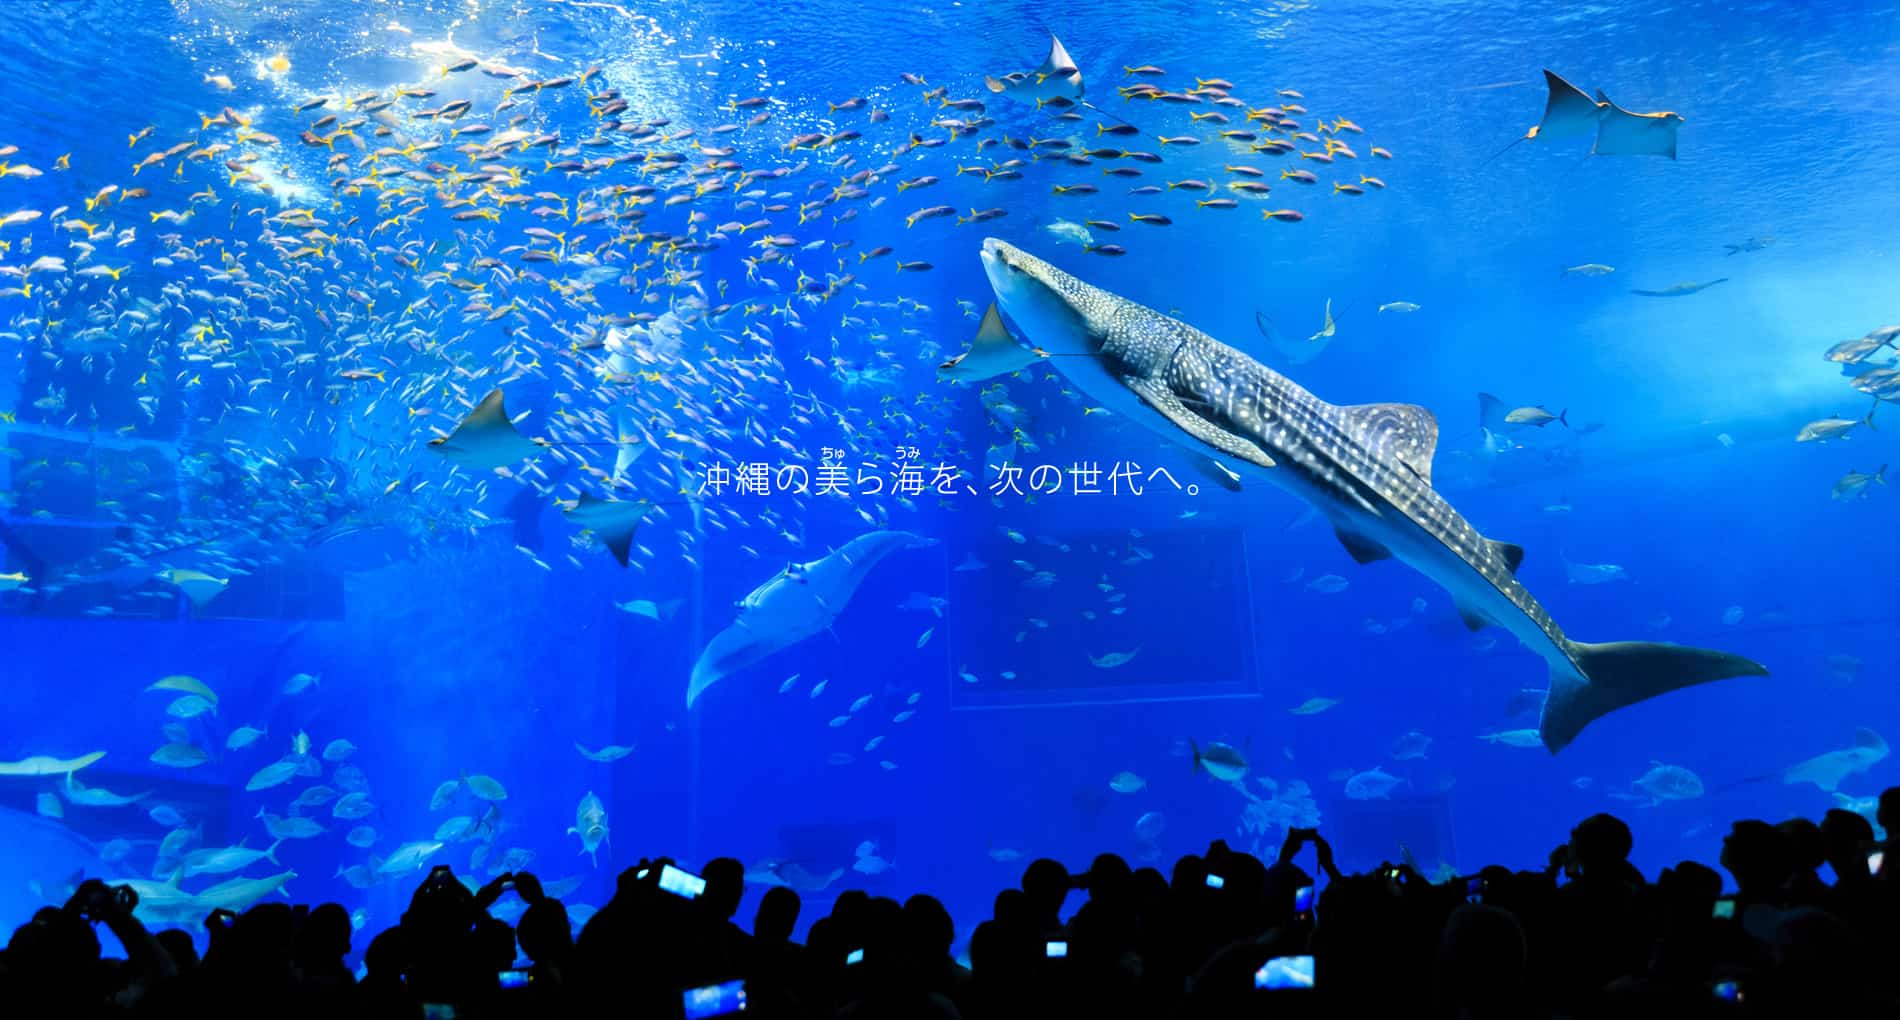 Okinawa Churaumi Aquarium For The Next Generation To Inherit The Beautiful Seas Of Okinawa